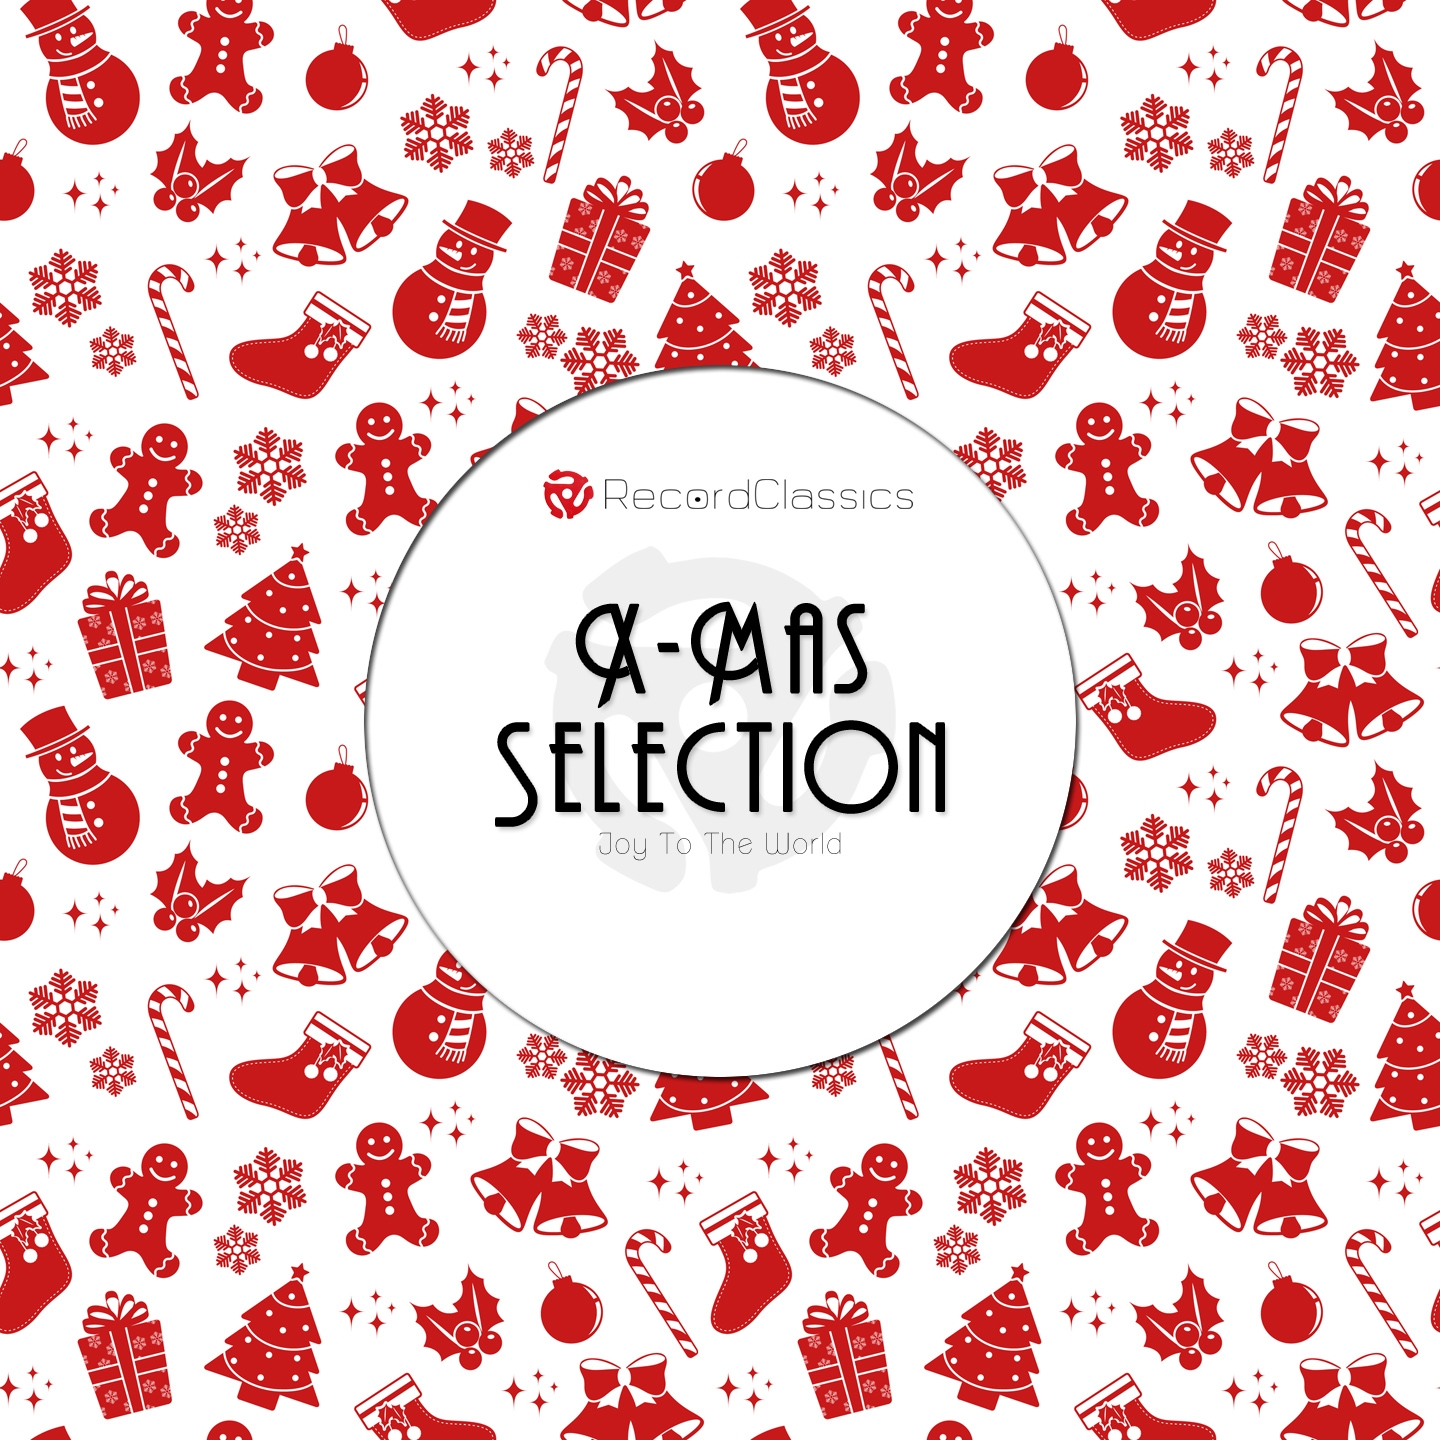 X-Mas Selection (Joy to the World))